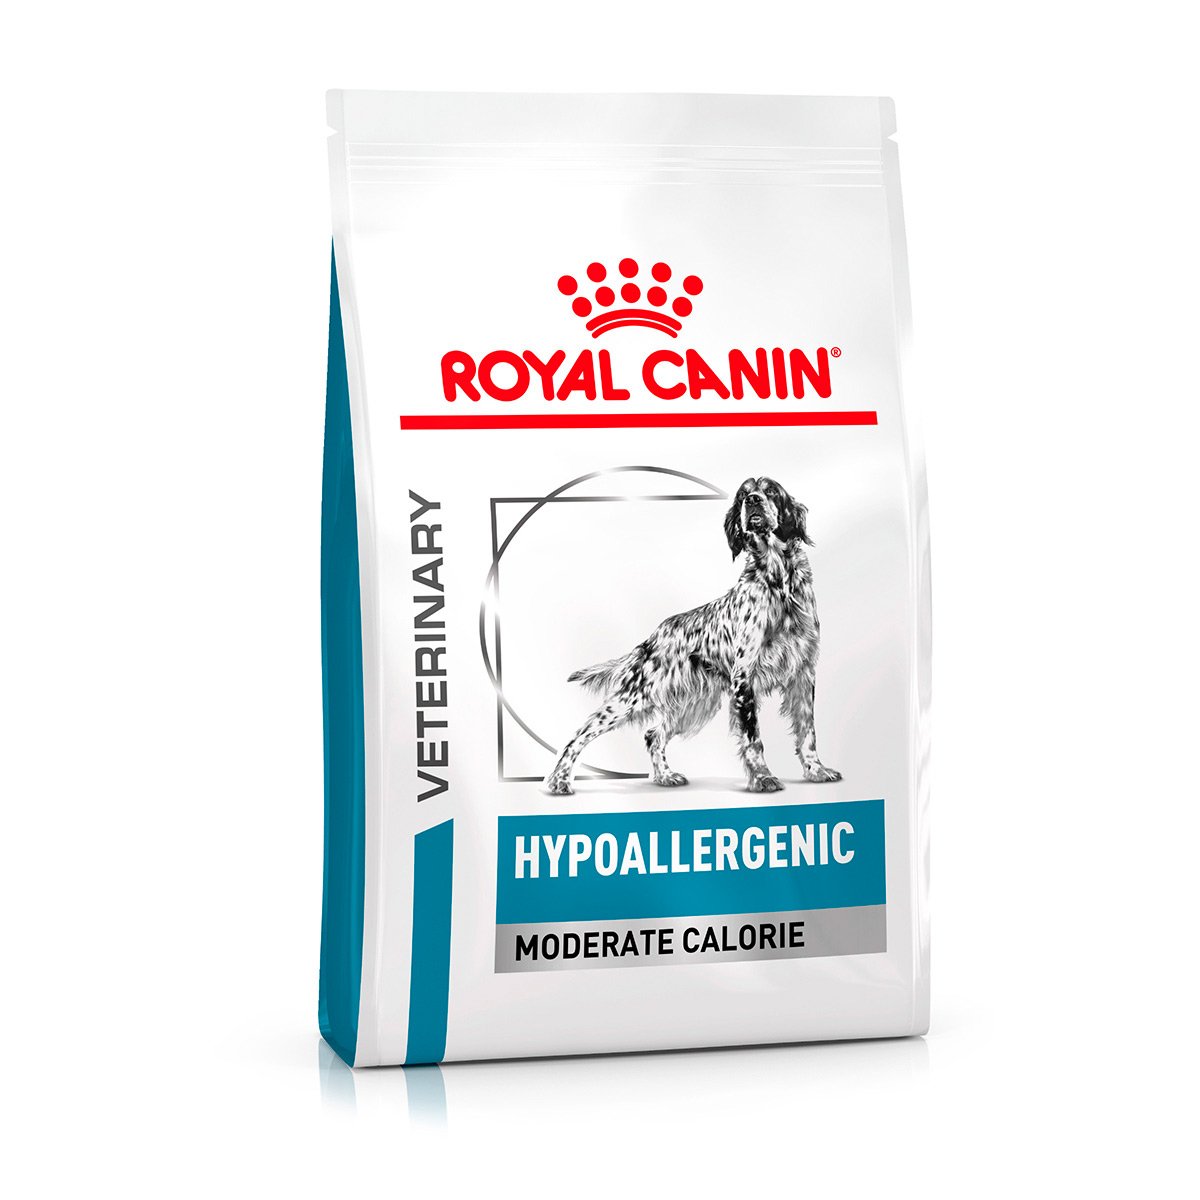 ROYAL CANIN® Veterinary HYPOALLERGENIC MODERATE CALORIE Trockenfutter für Hunde 1,5kg von Royal Canin